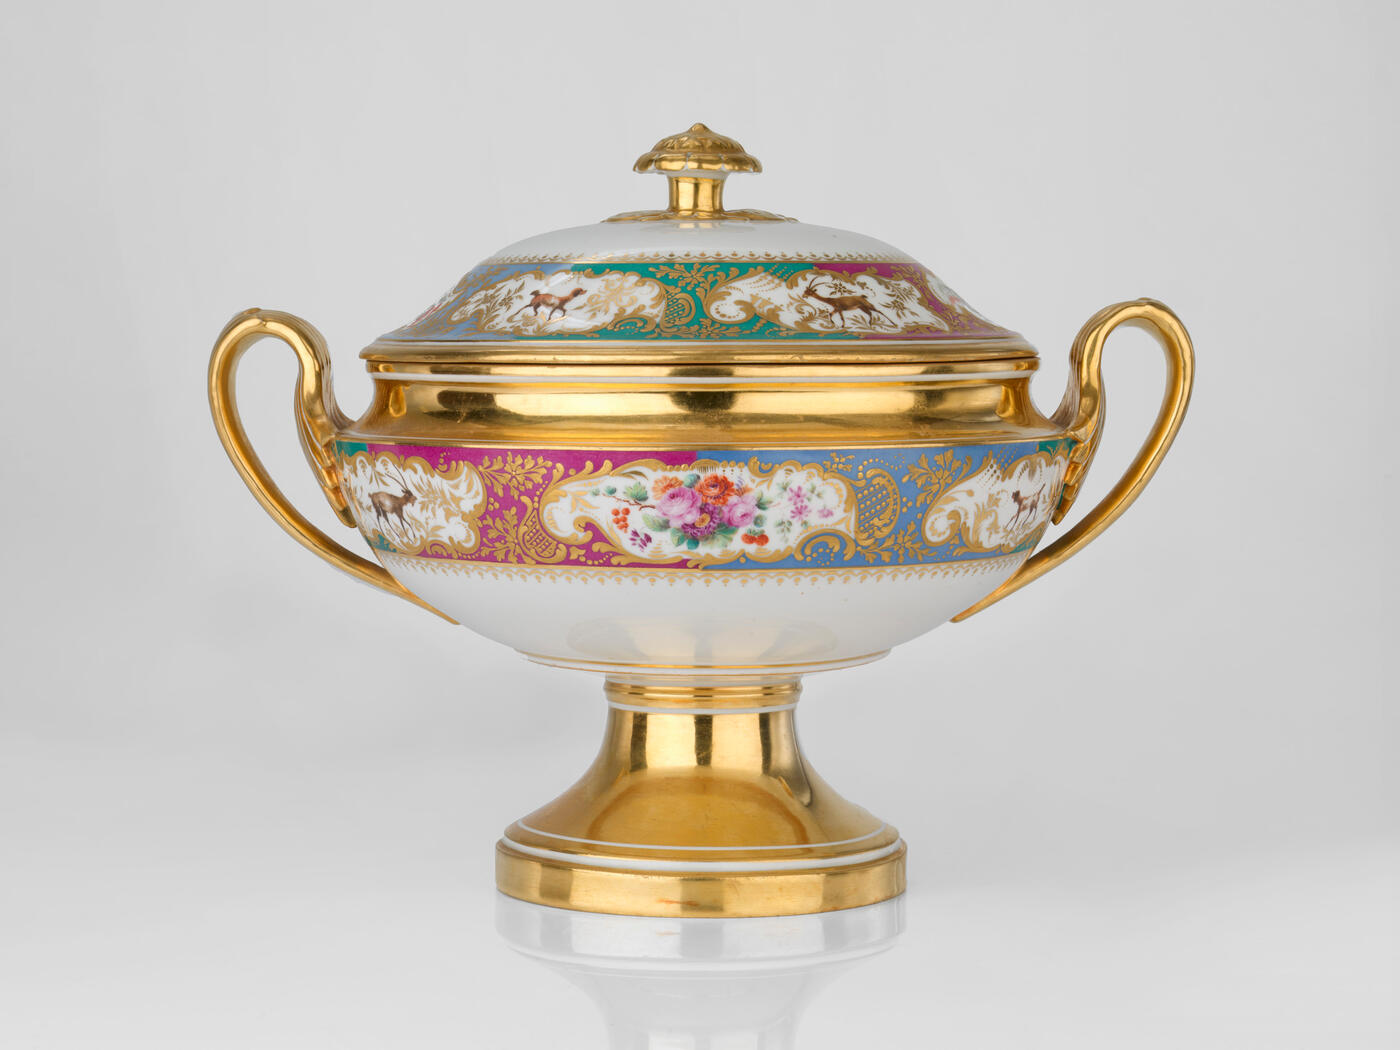 A Porcelain Soup-Tureen from the Grand Duke Mikhail Pavlovich Service